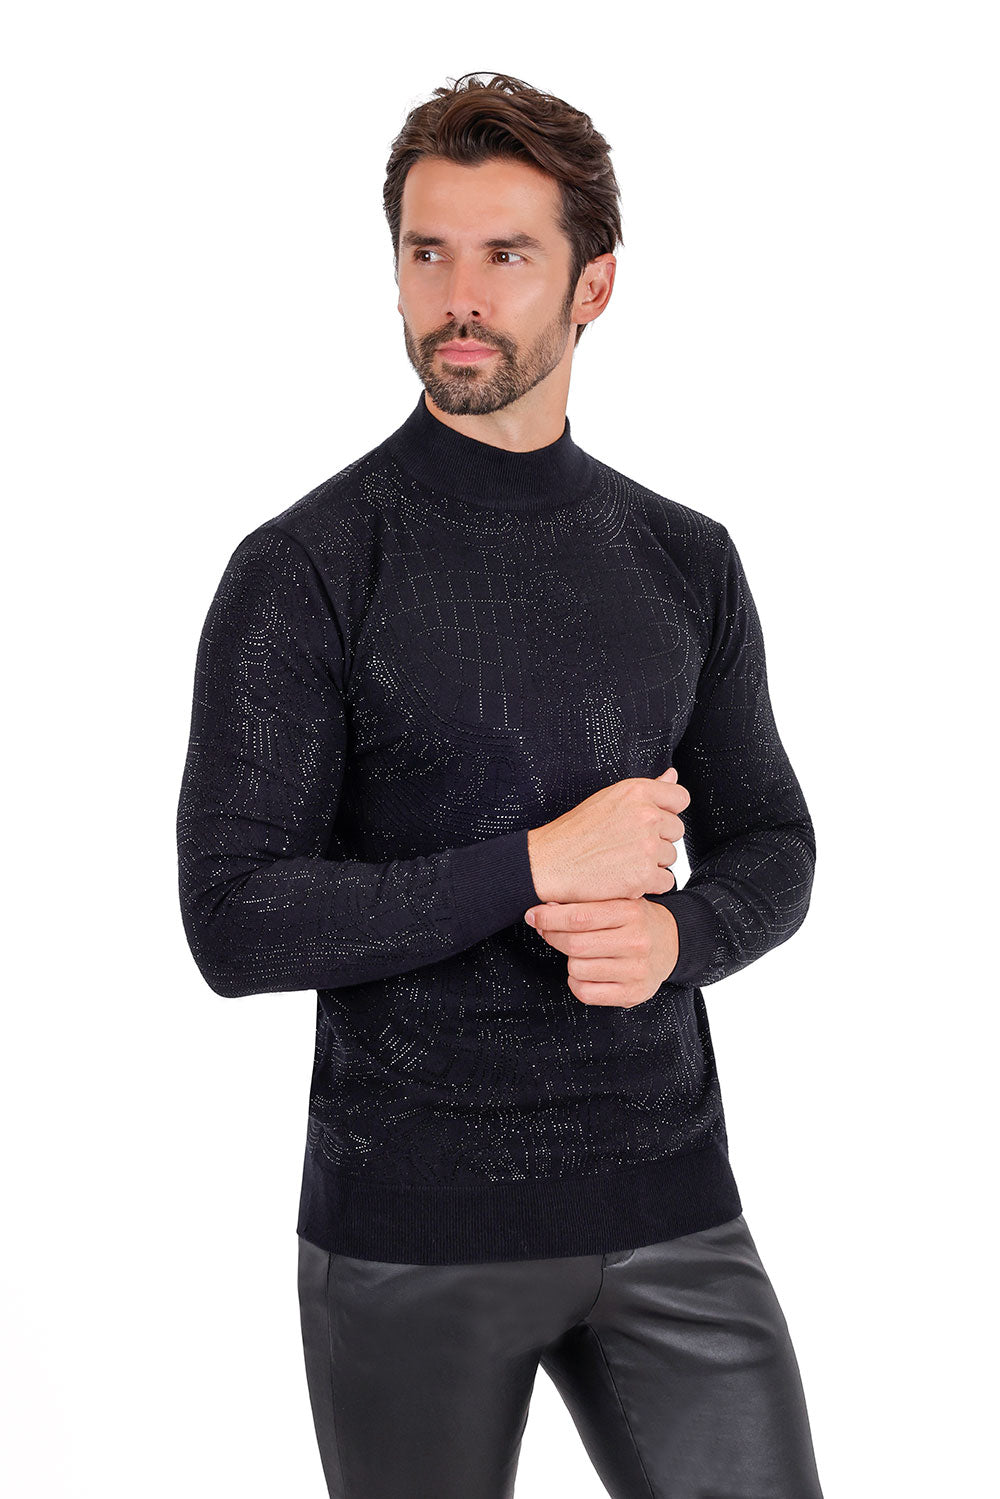 Barabas Men's Rhinestone Long Sleeve Turtleneck Sweater 3LS2107 Black